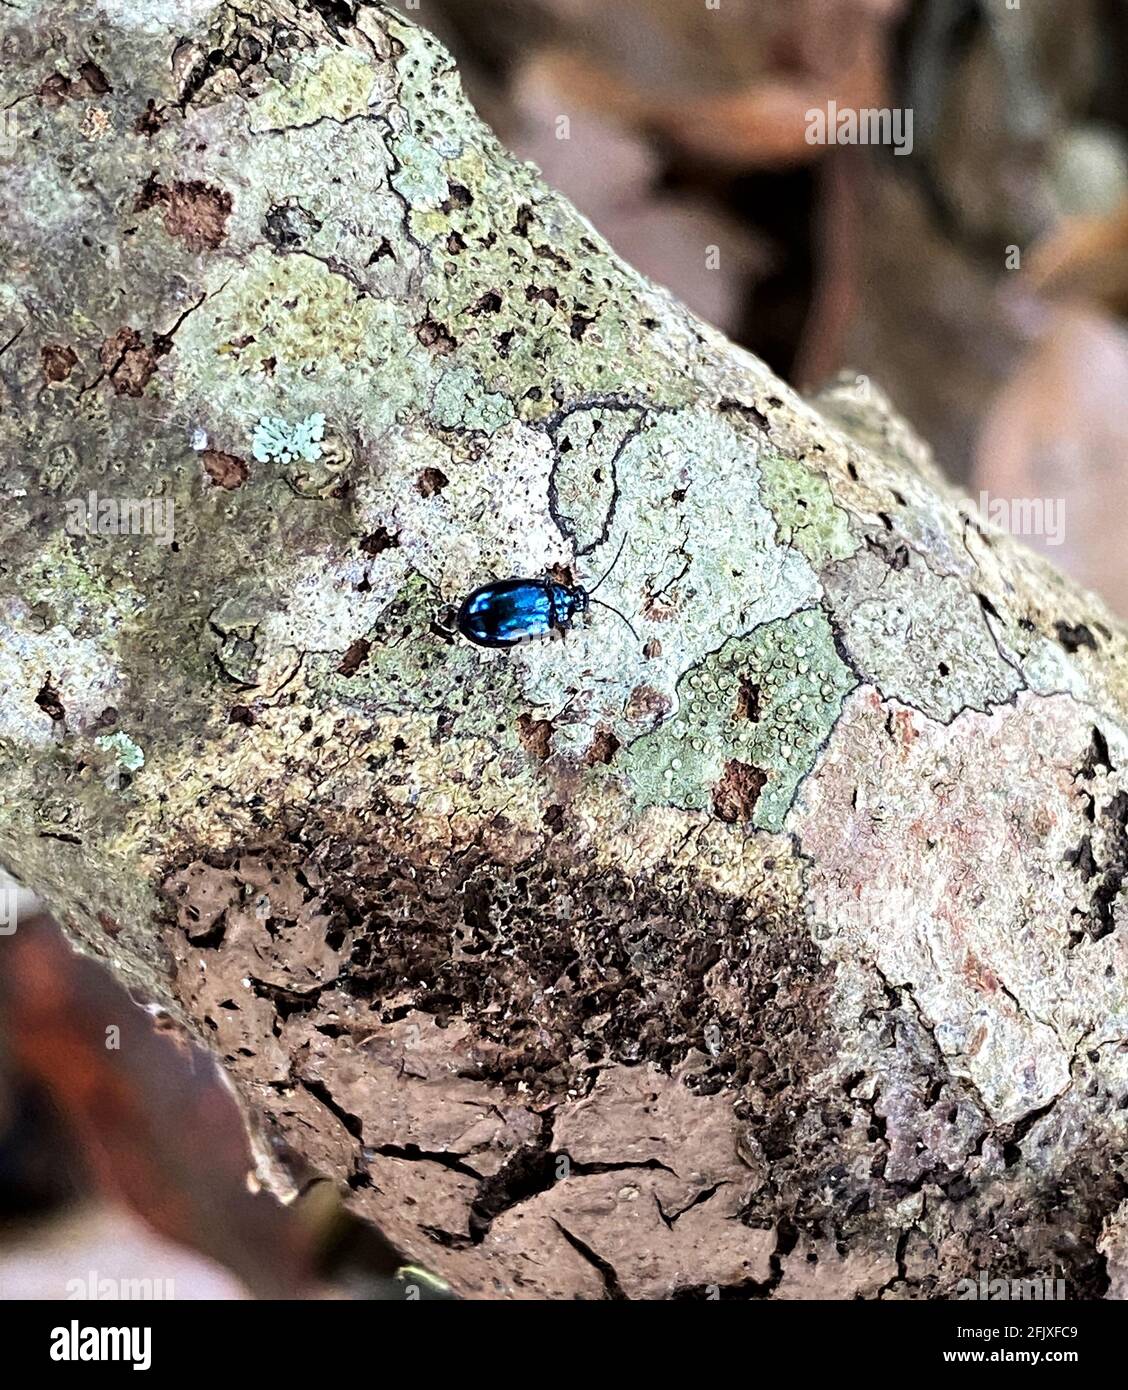 Blue metallic flea beetle on a wooden log Stock Photo